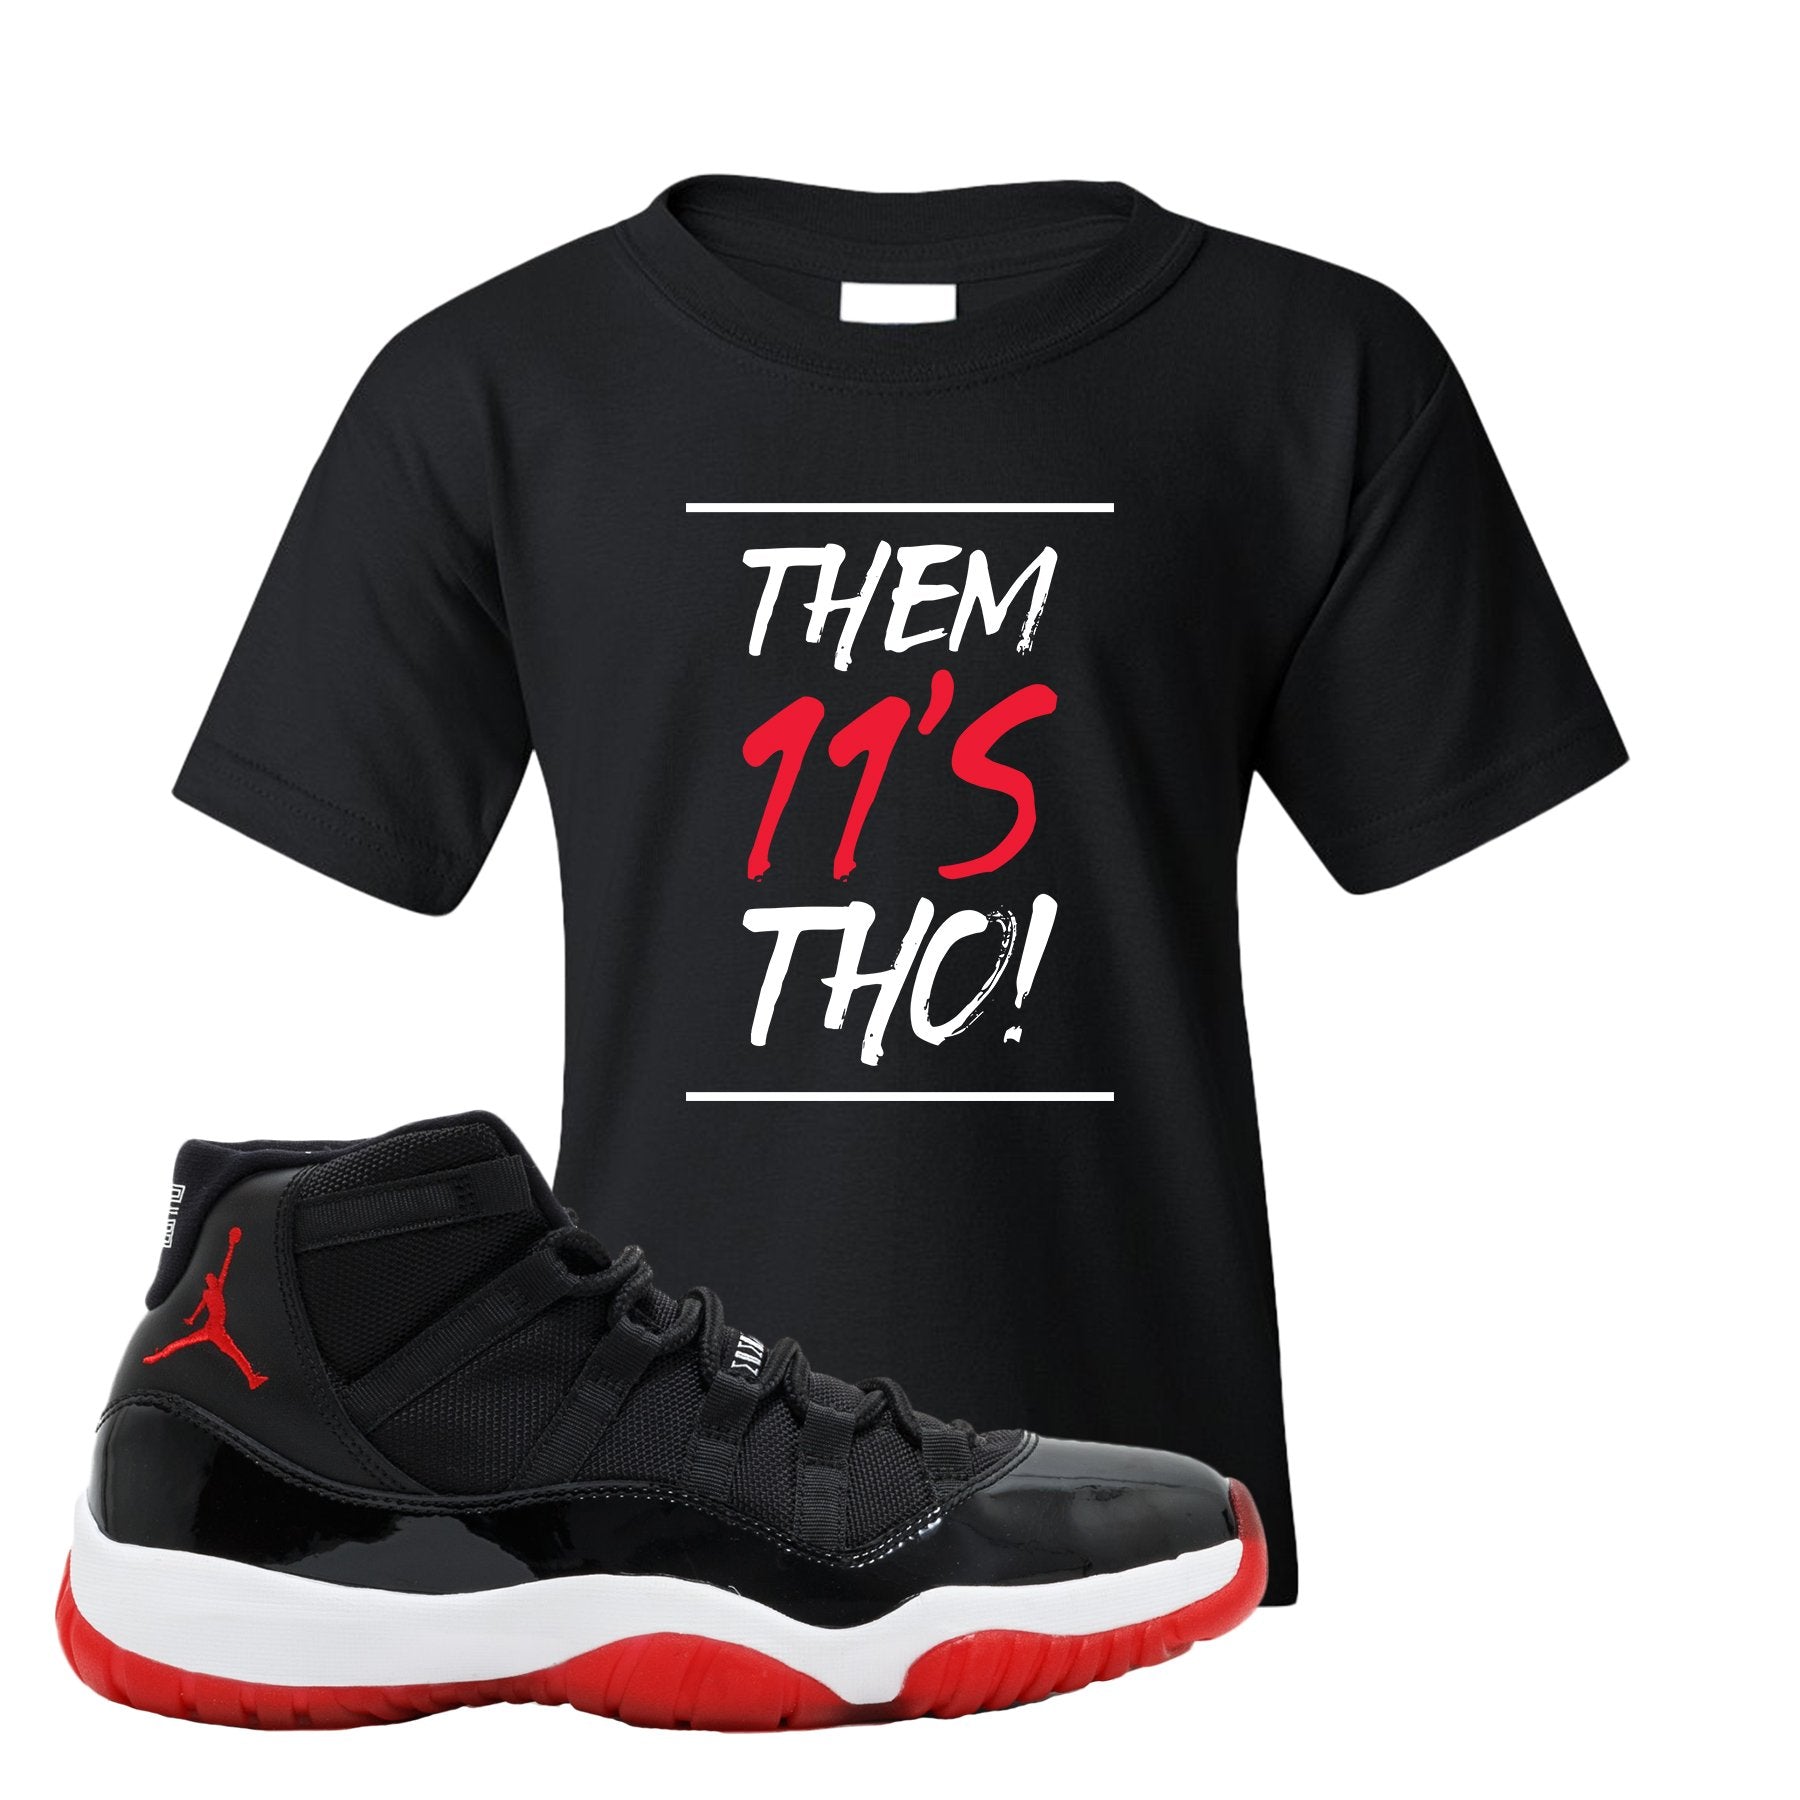 Jordan 11 Bred Them 11s Tho! Black Sneaker Hook Up Kid's T-Shirt